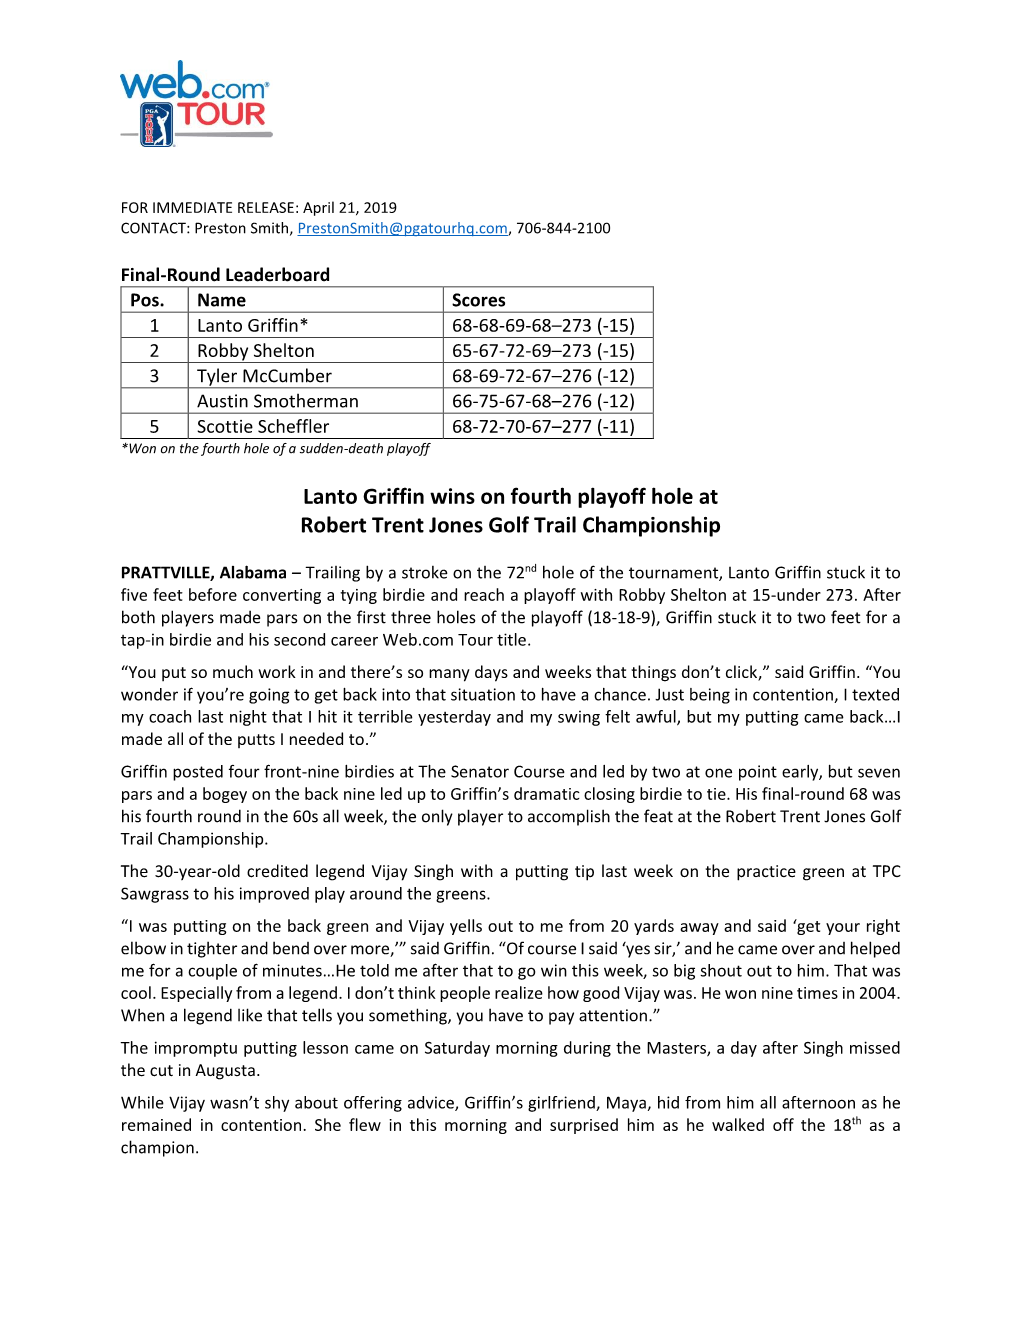 Lanto Griffin Wins on Fourth Playoff Hole at Robert Trent Jones Golf Trail Championship